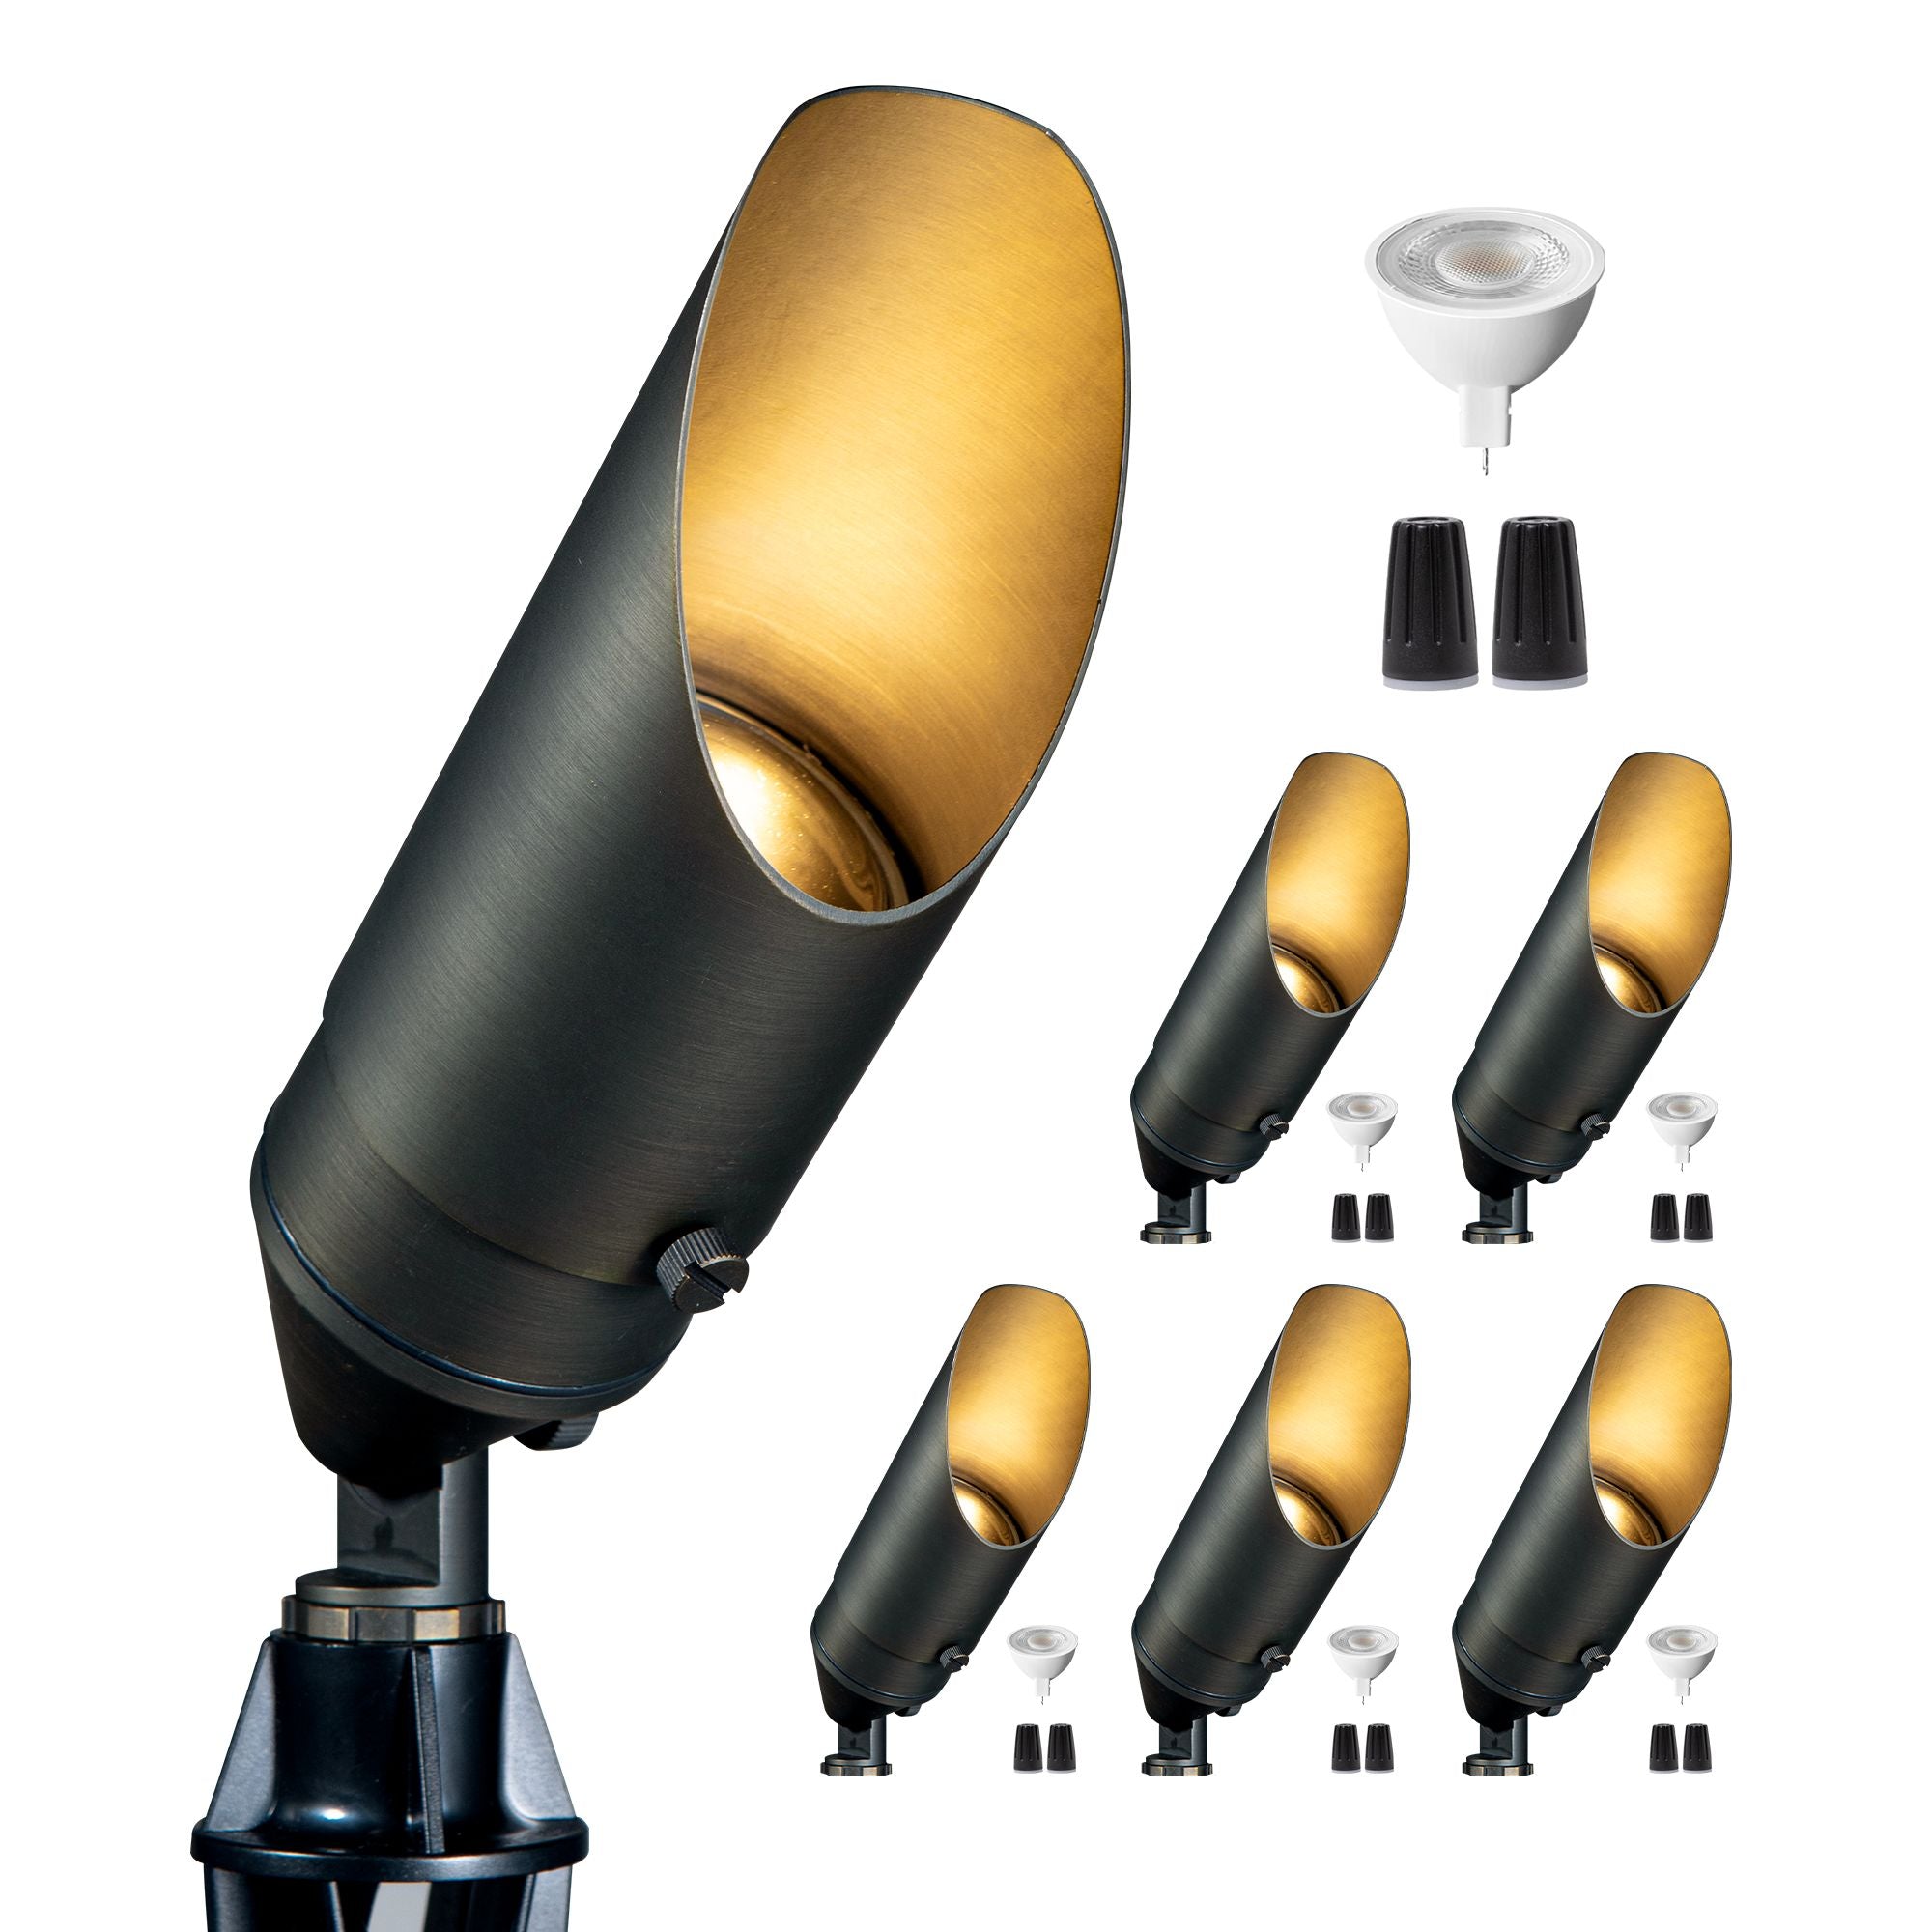 Coloer Die-Cast Brass Landscape Spotlights, 12 Pack Landscape Light Fixture with MR16 LED Bulb Kit Ground Stake Included,12V AC/DC Low Voltage Outdoor